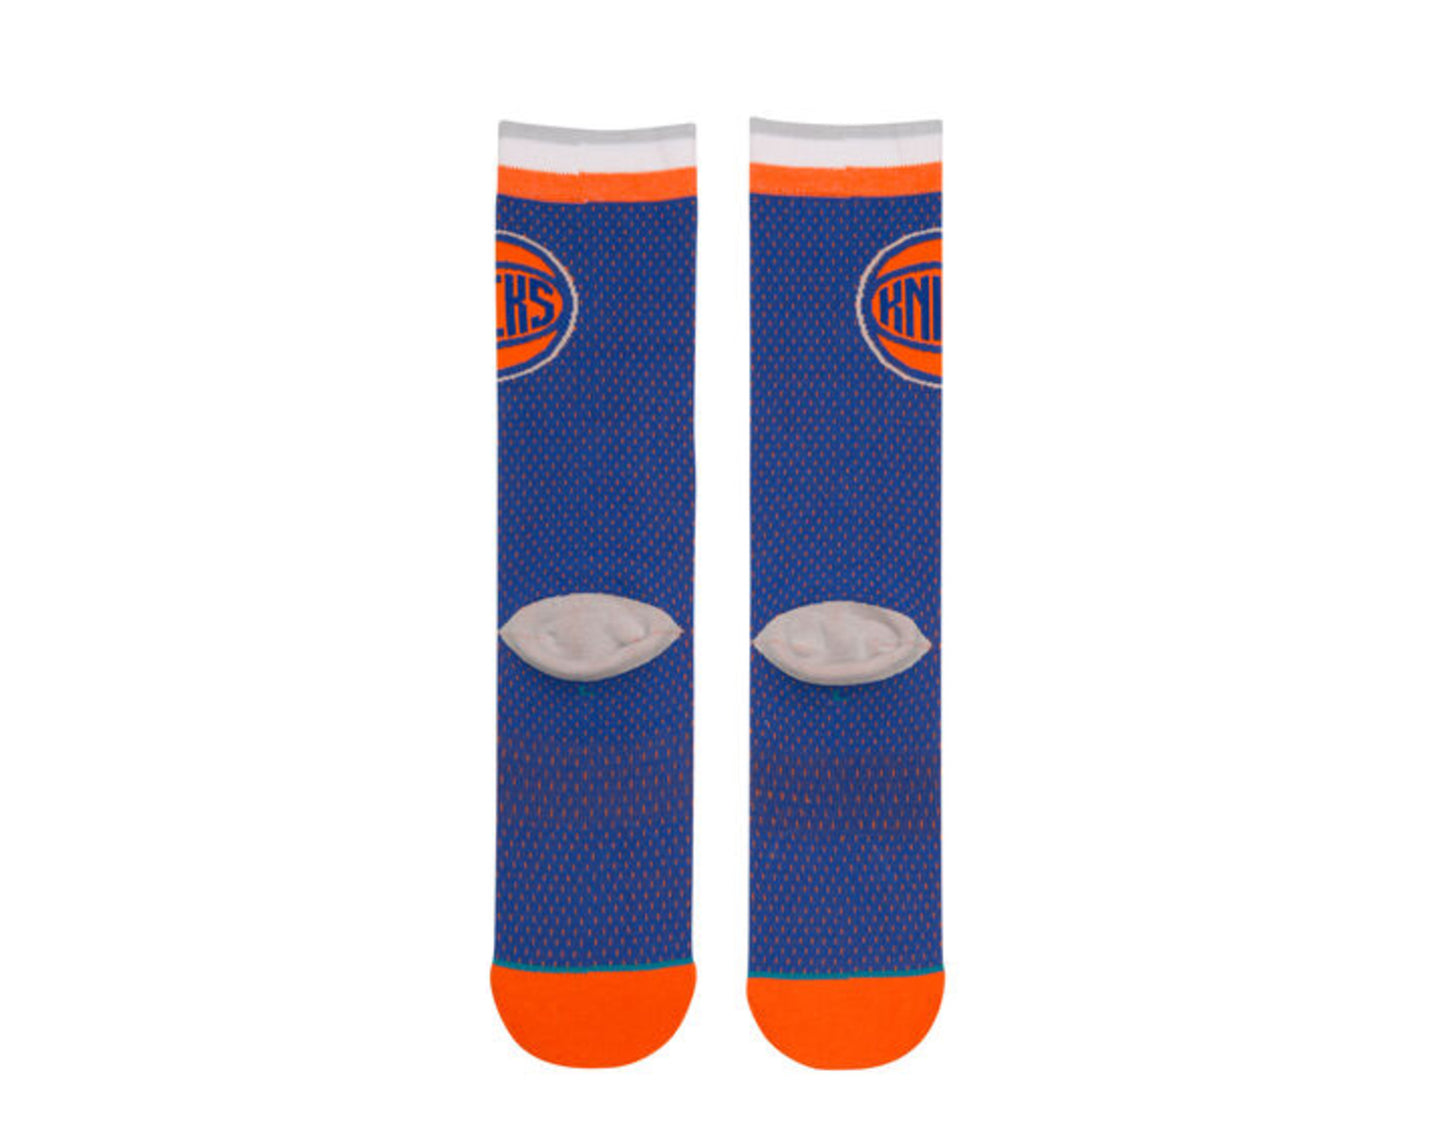 Stance Casual NBA NY Knicks Jersey Blue/Orange Crew Socks M545D17KNI-BLU